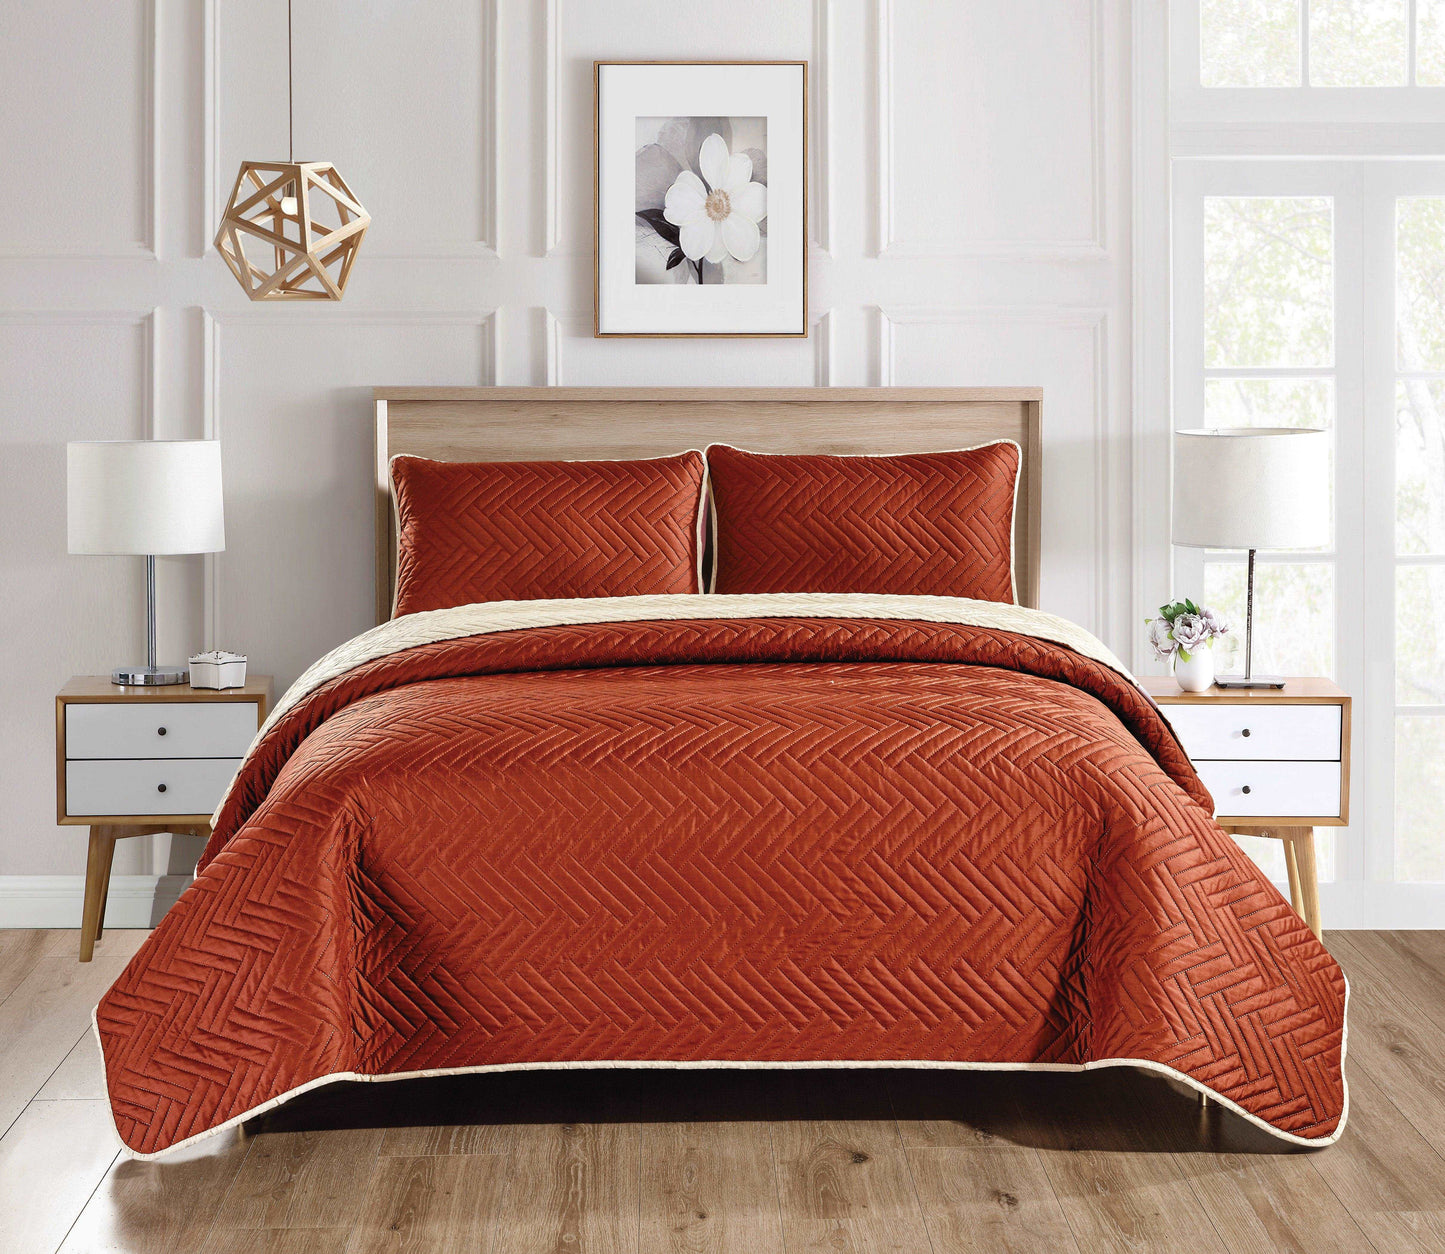 Linen World Orange/Green / King “Sutton” 3 piece reversible quilt set with 2 shams